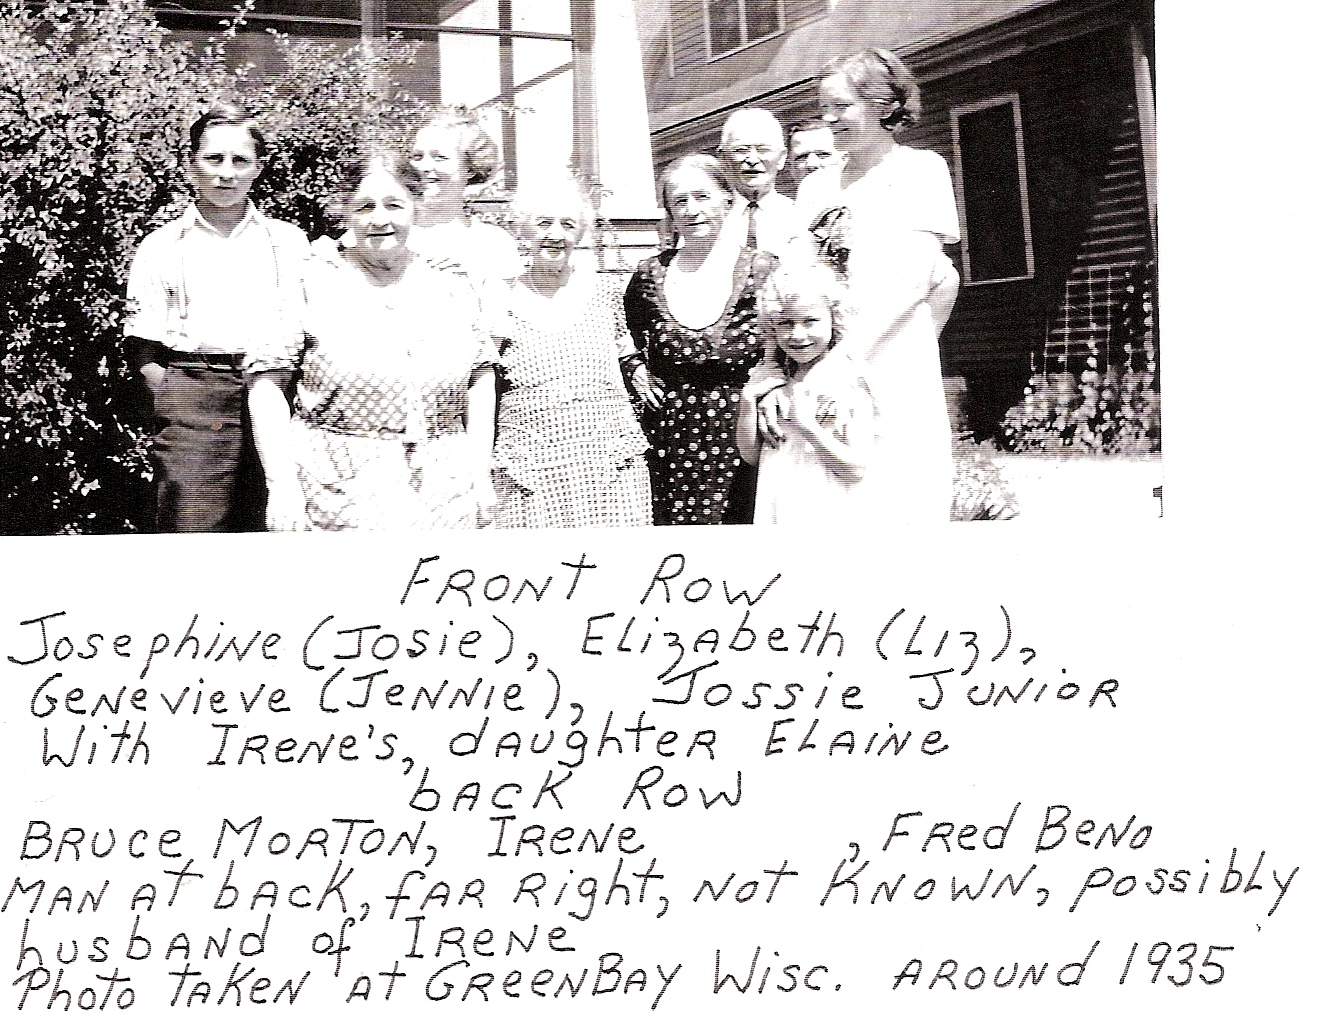 family reunion on greenbay 1935